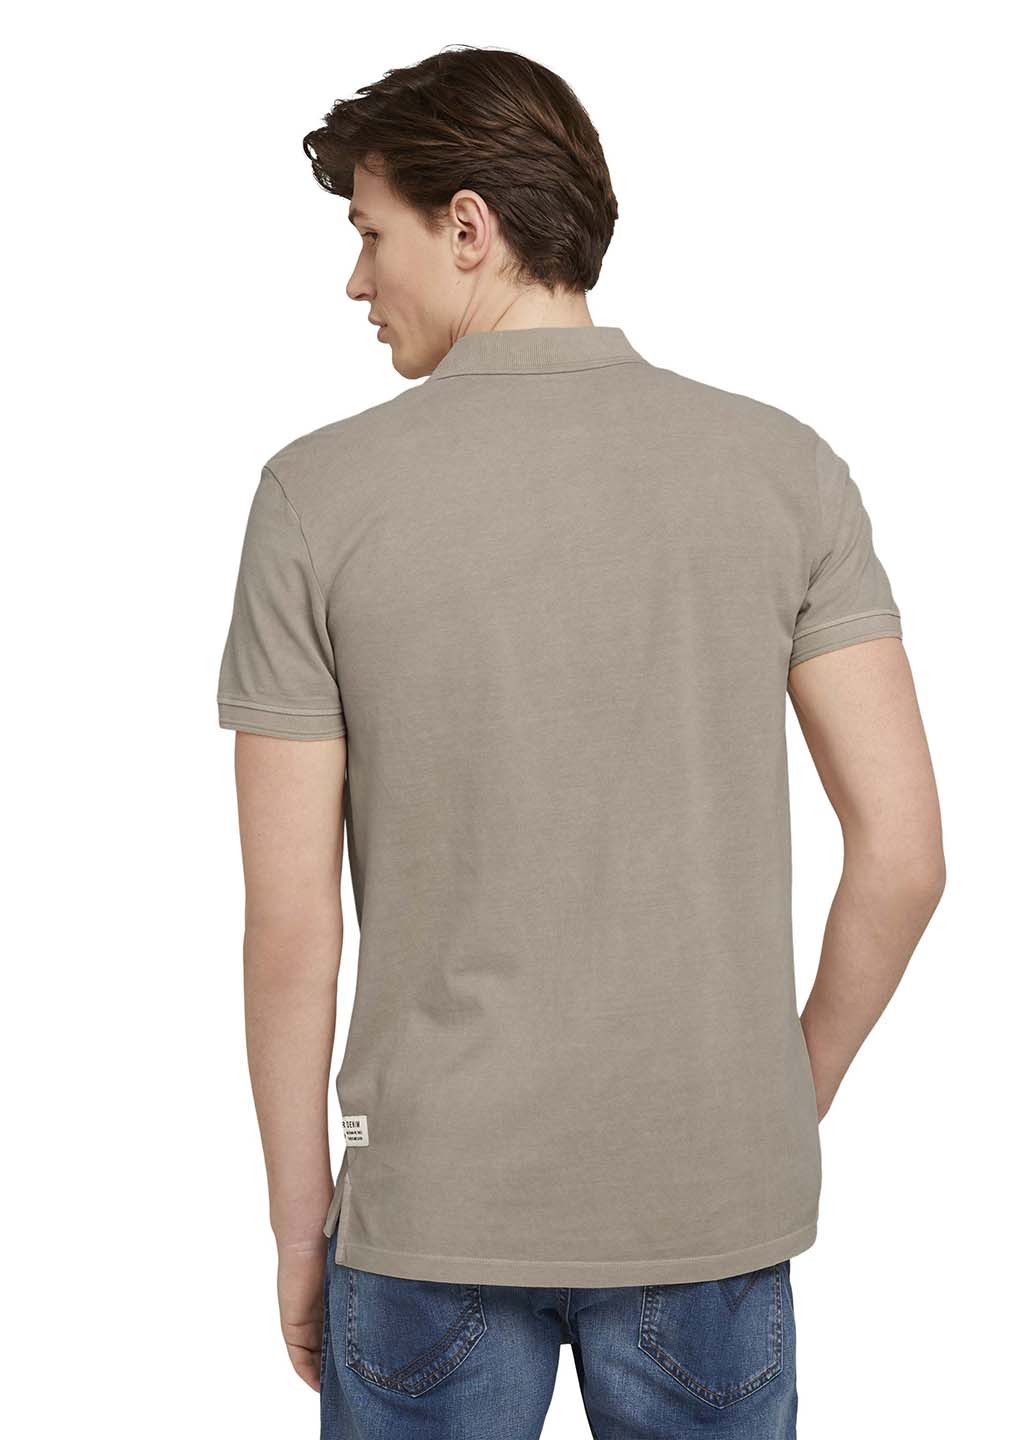 Бежевая футболка-поло для мужчин Tom Tailor однотонная